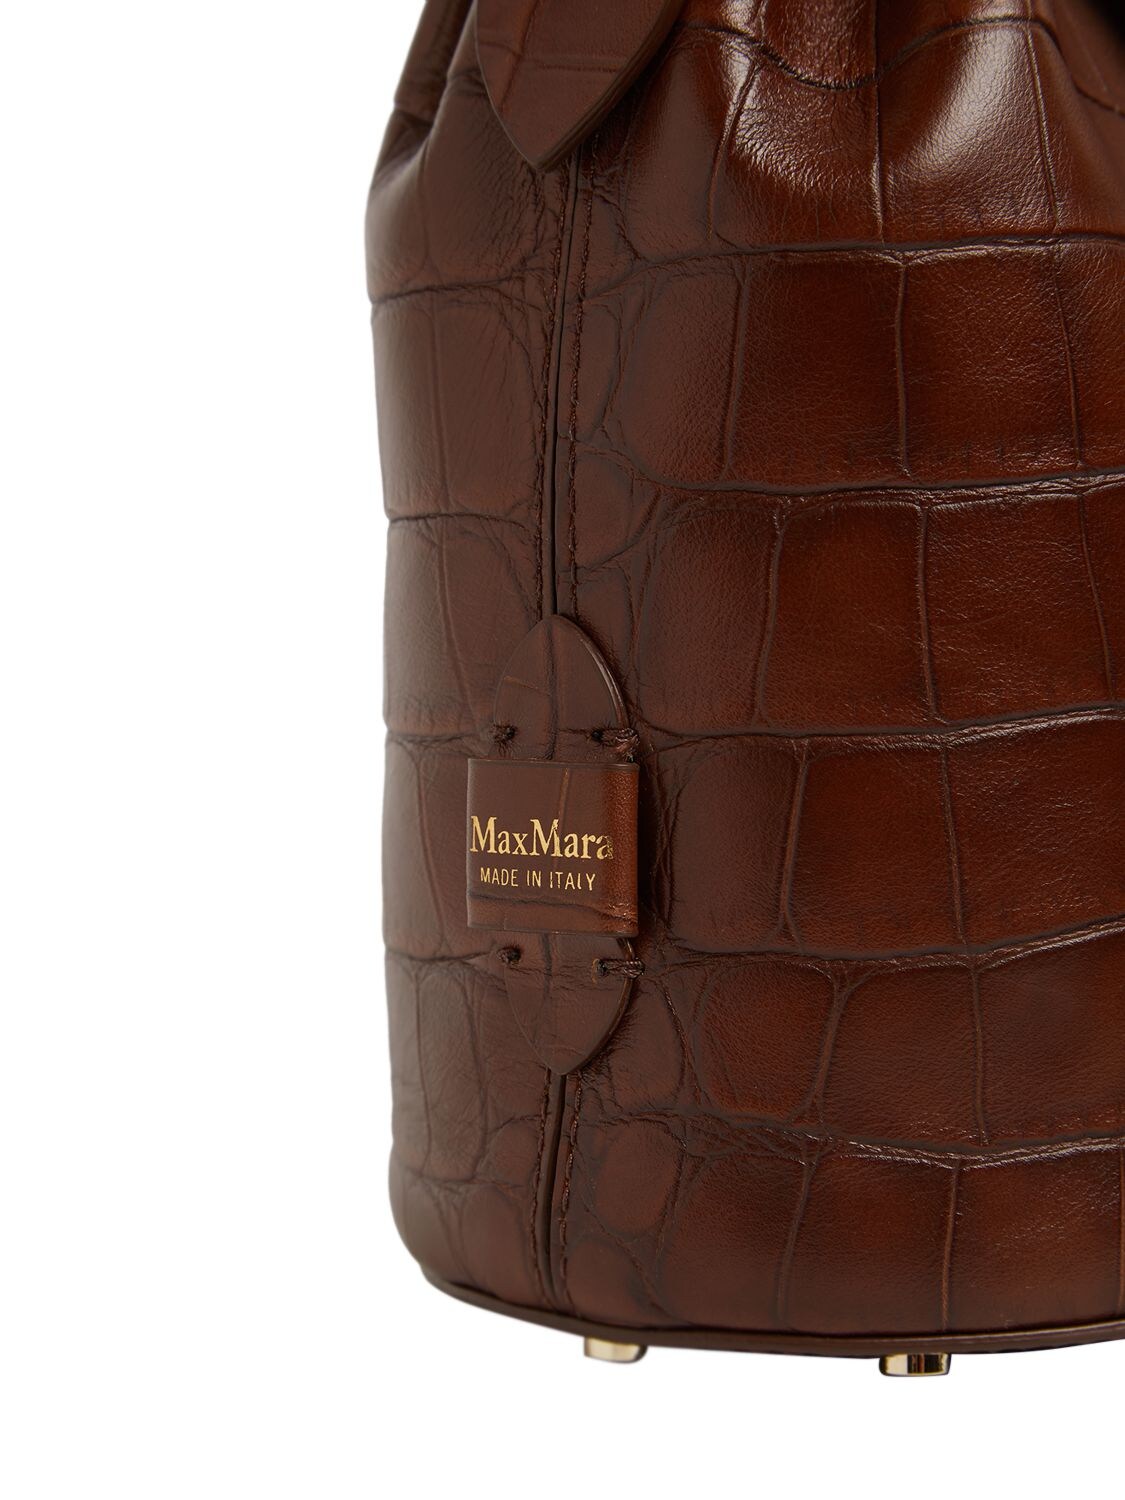 Morimi Croc-Embossed Leather Handbag Bucket/Backpack Black